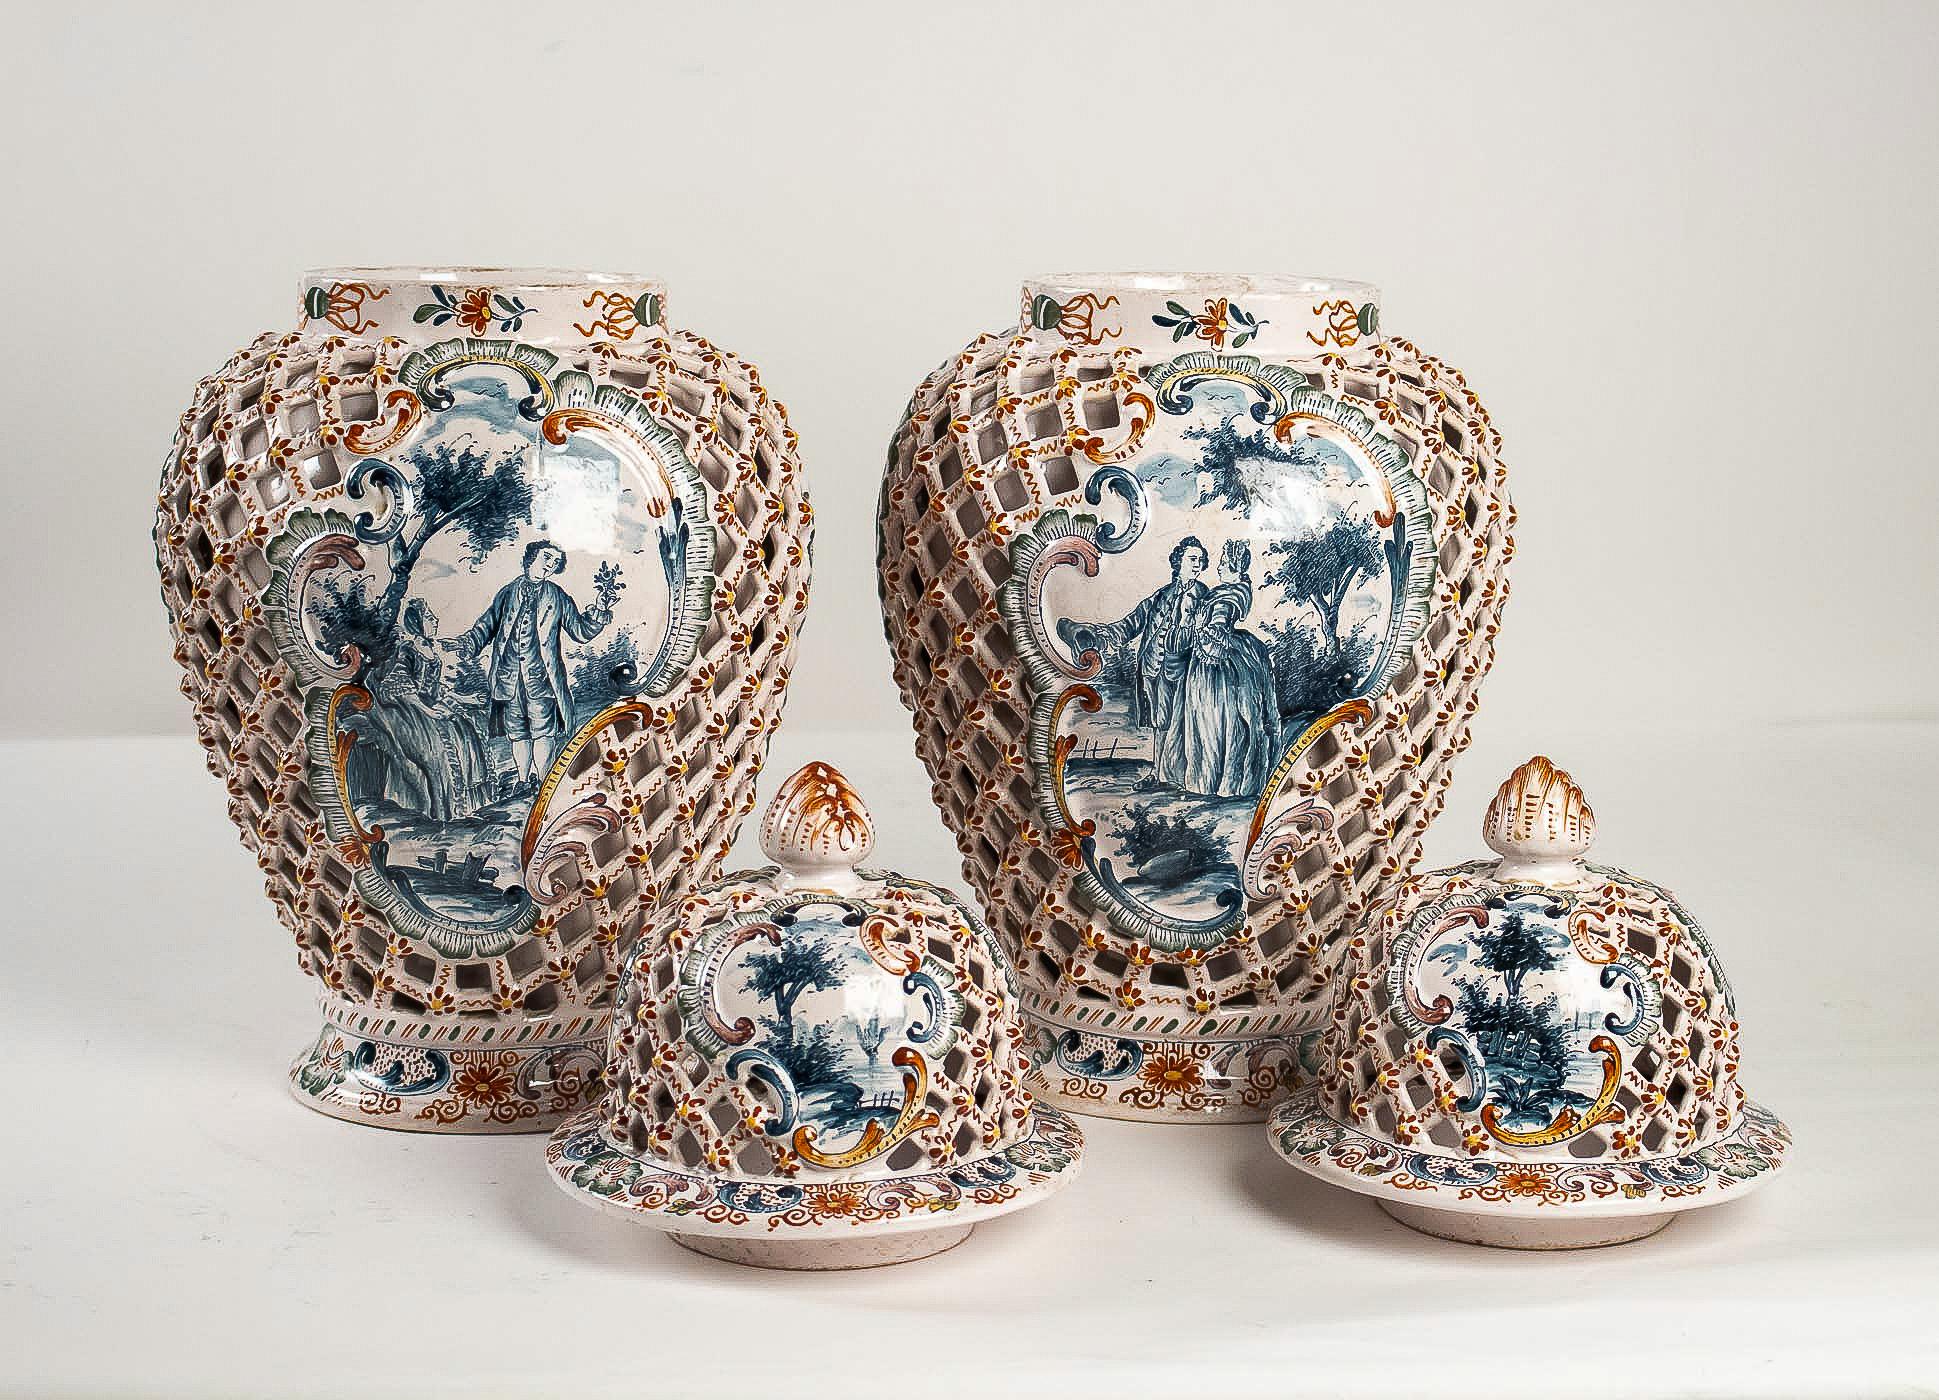 Polychromed Dutch Early-19th Century Polychrome Delft Faience Pair of Vases, circa 1810-1818